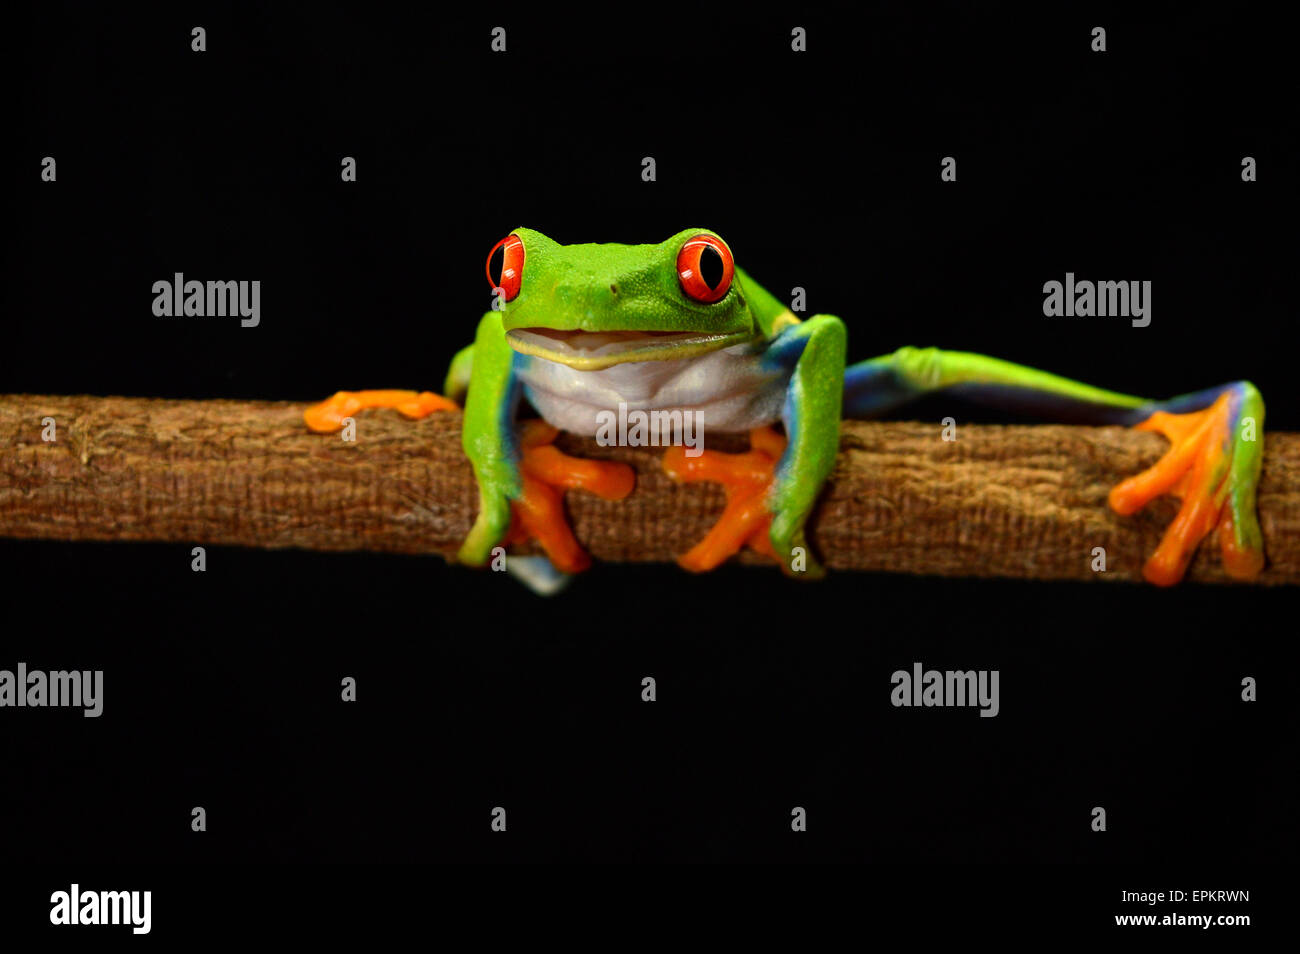 red eye frog Stock Photo